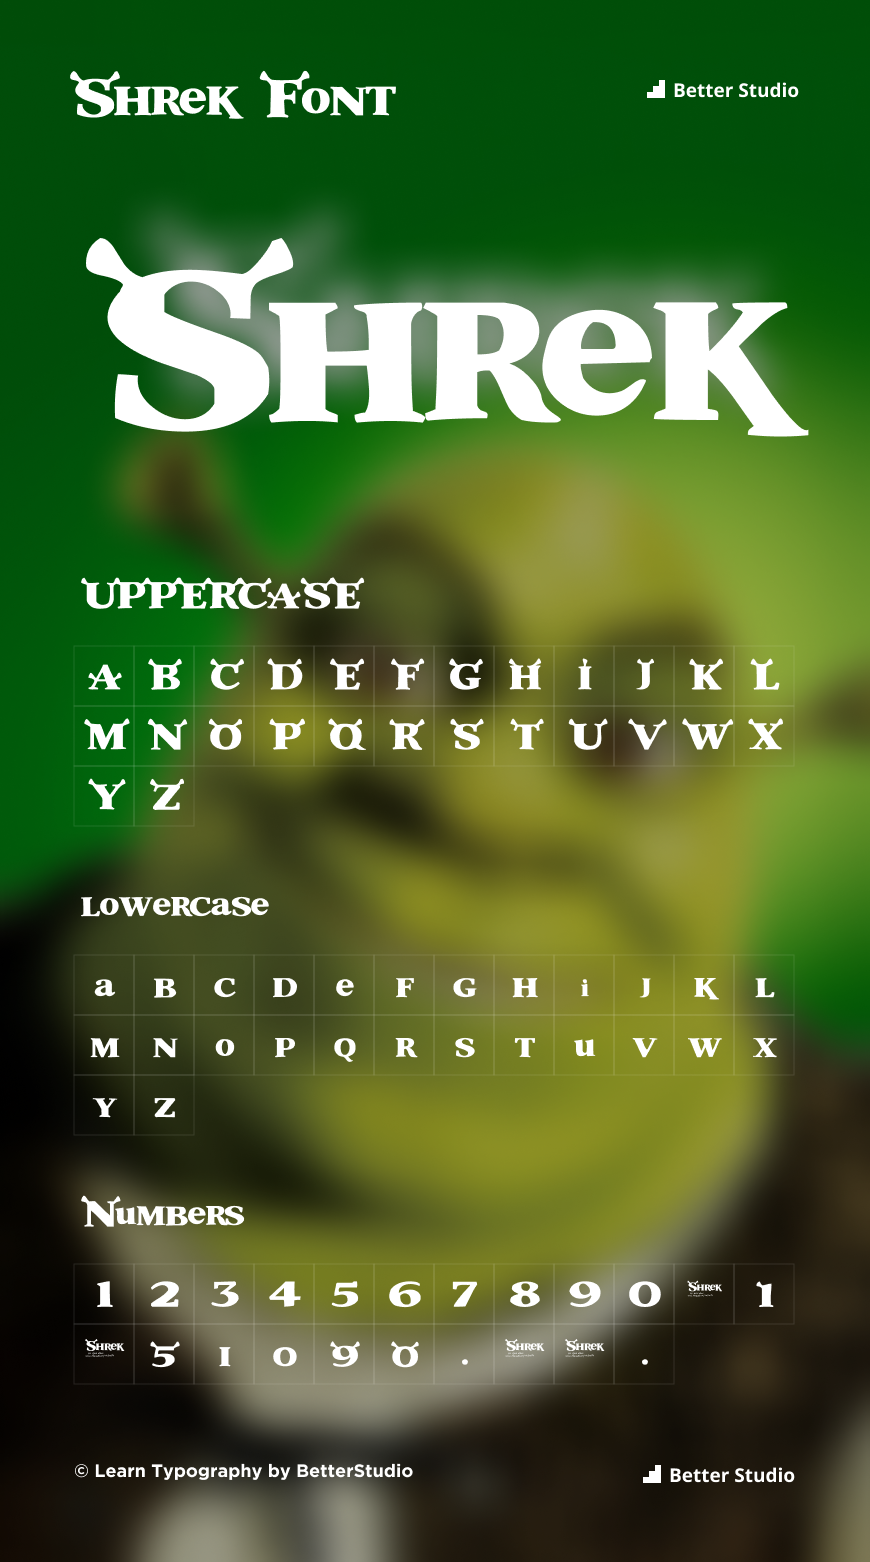 Shrek Logo Png